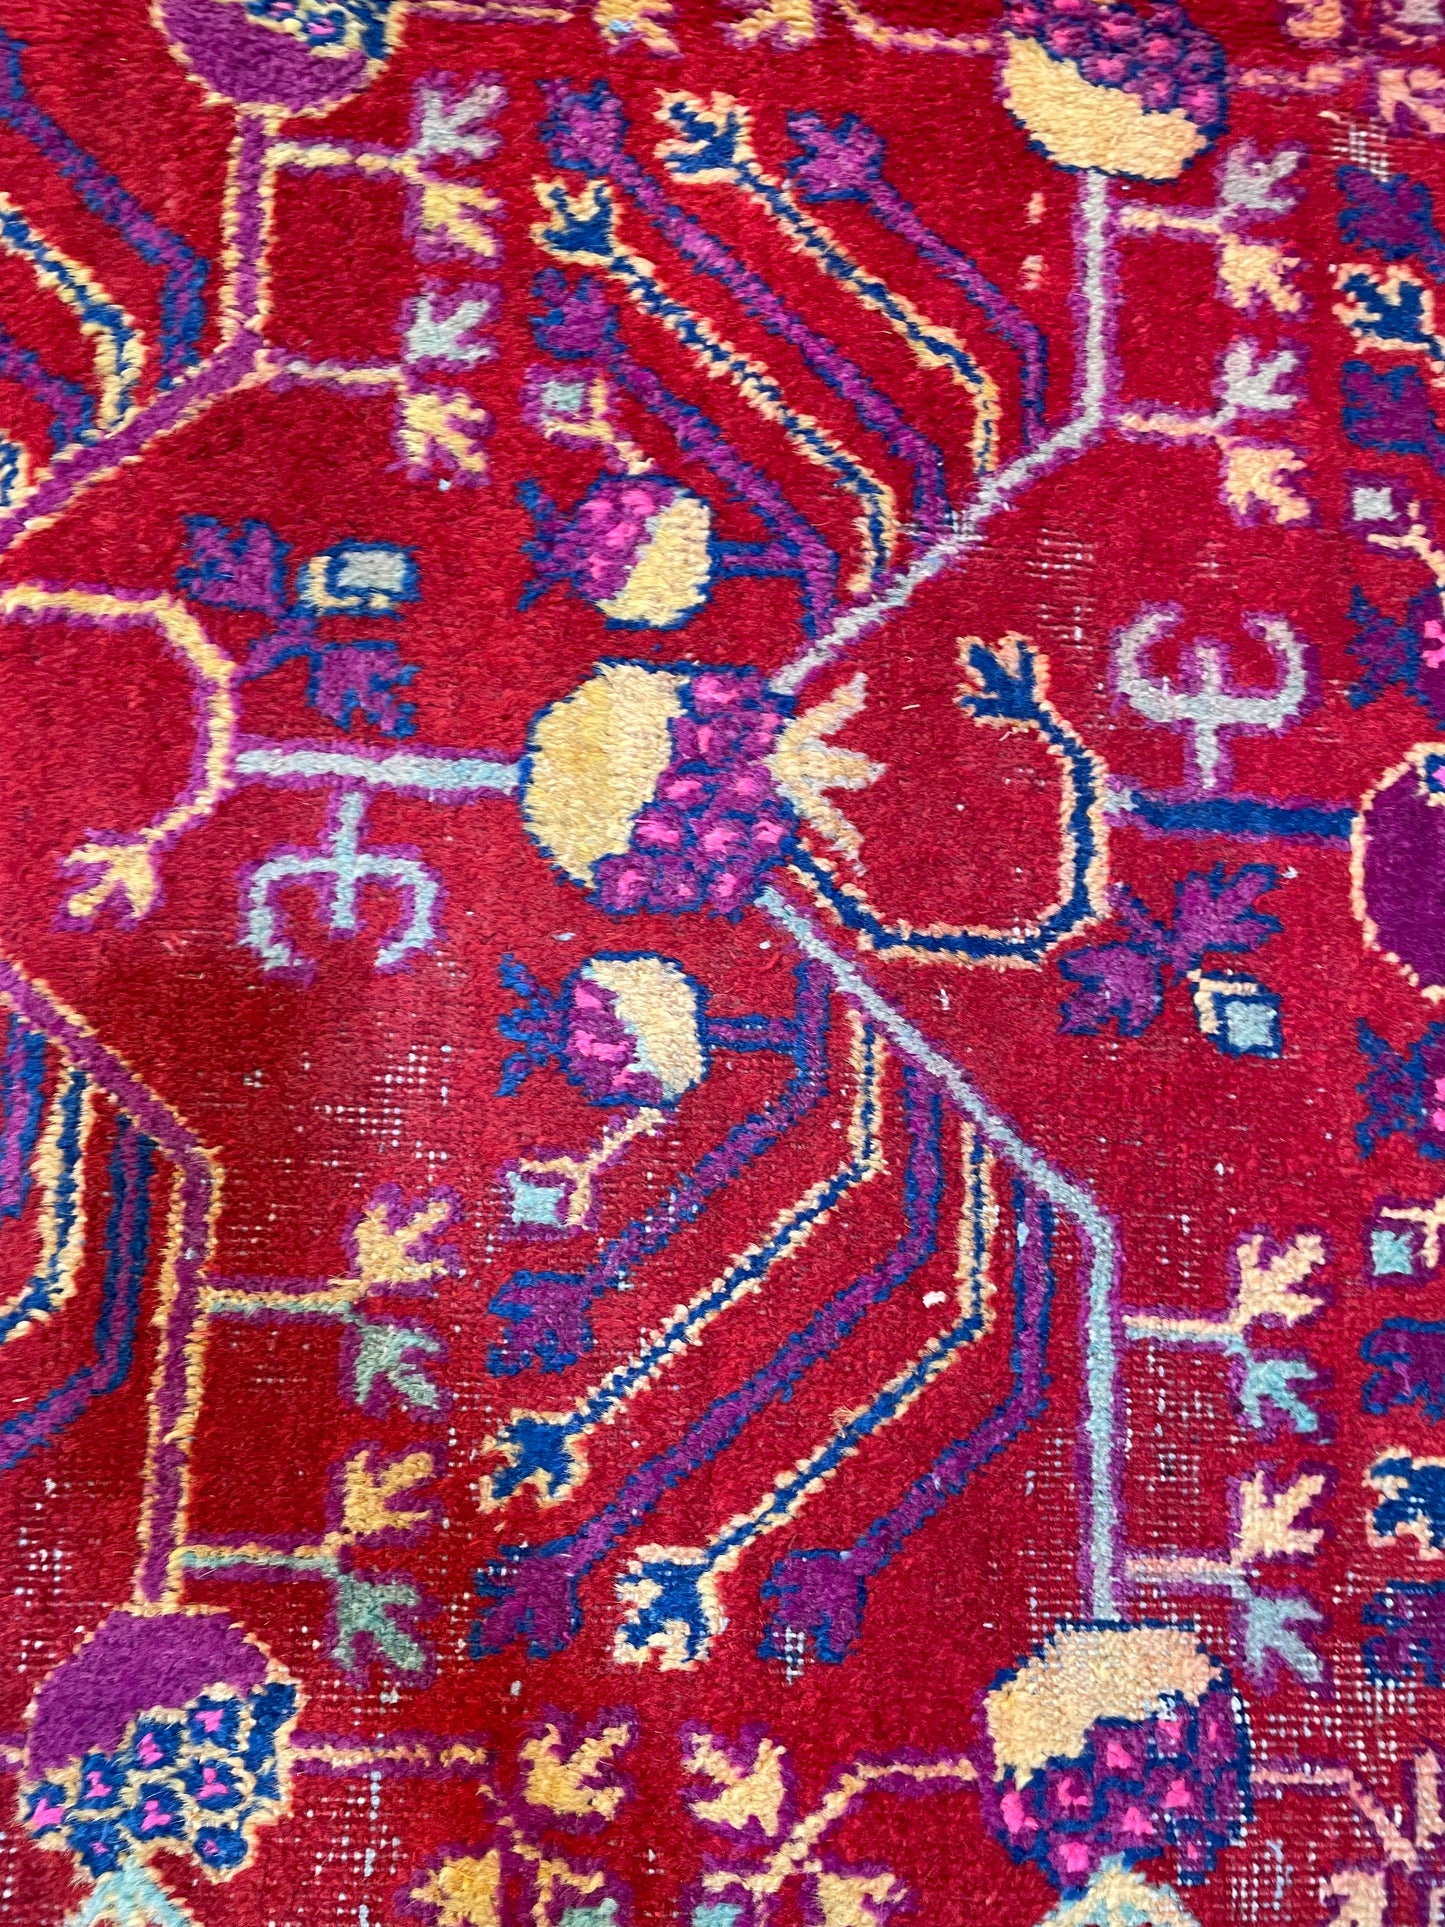 Antique Hand-Knotted Wool Area Rug Khotan Samarkand 6' x 11'